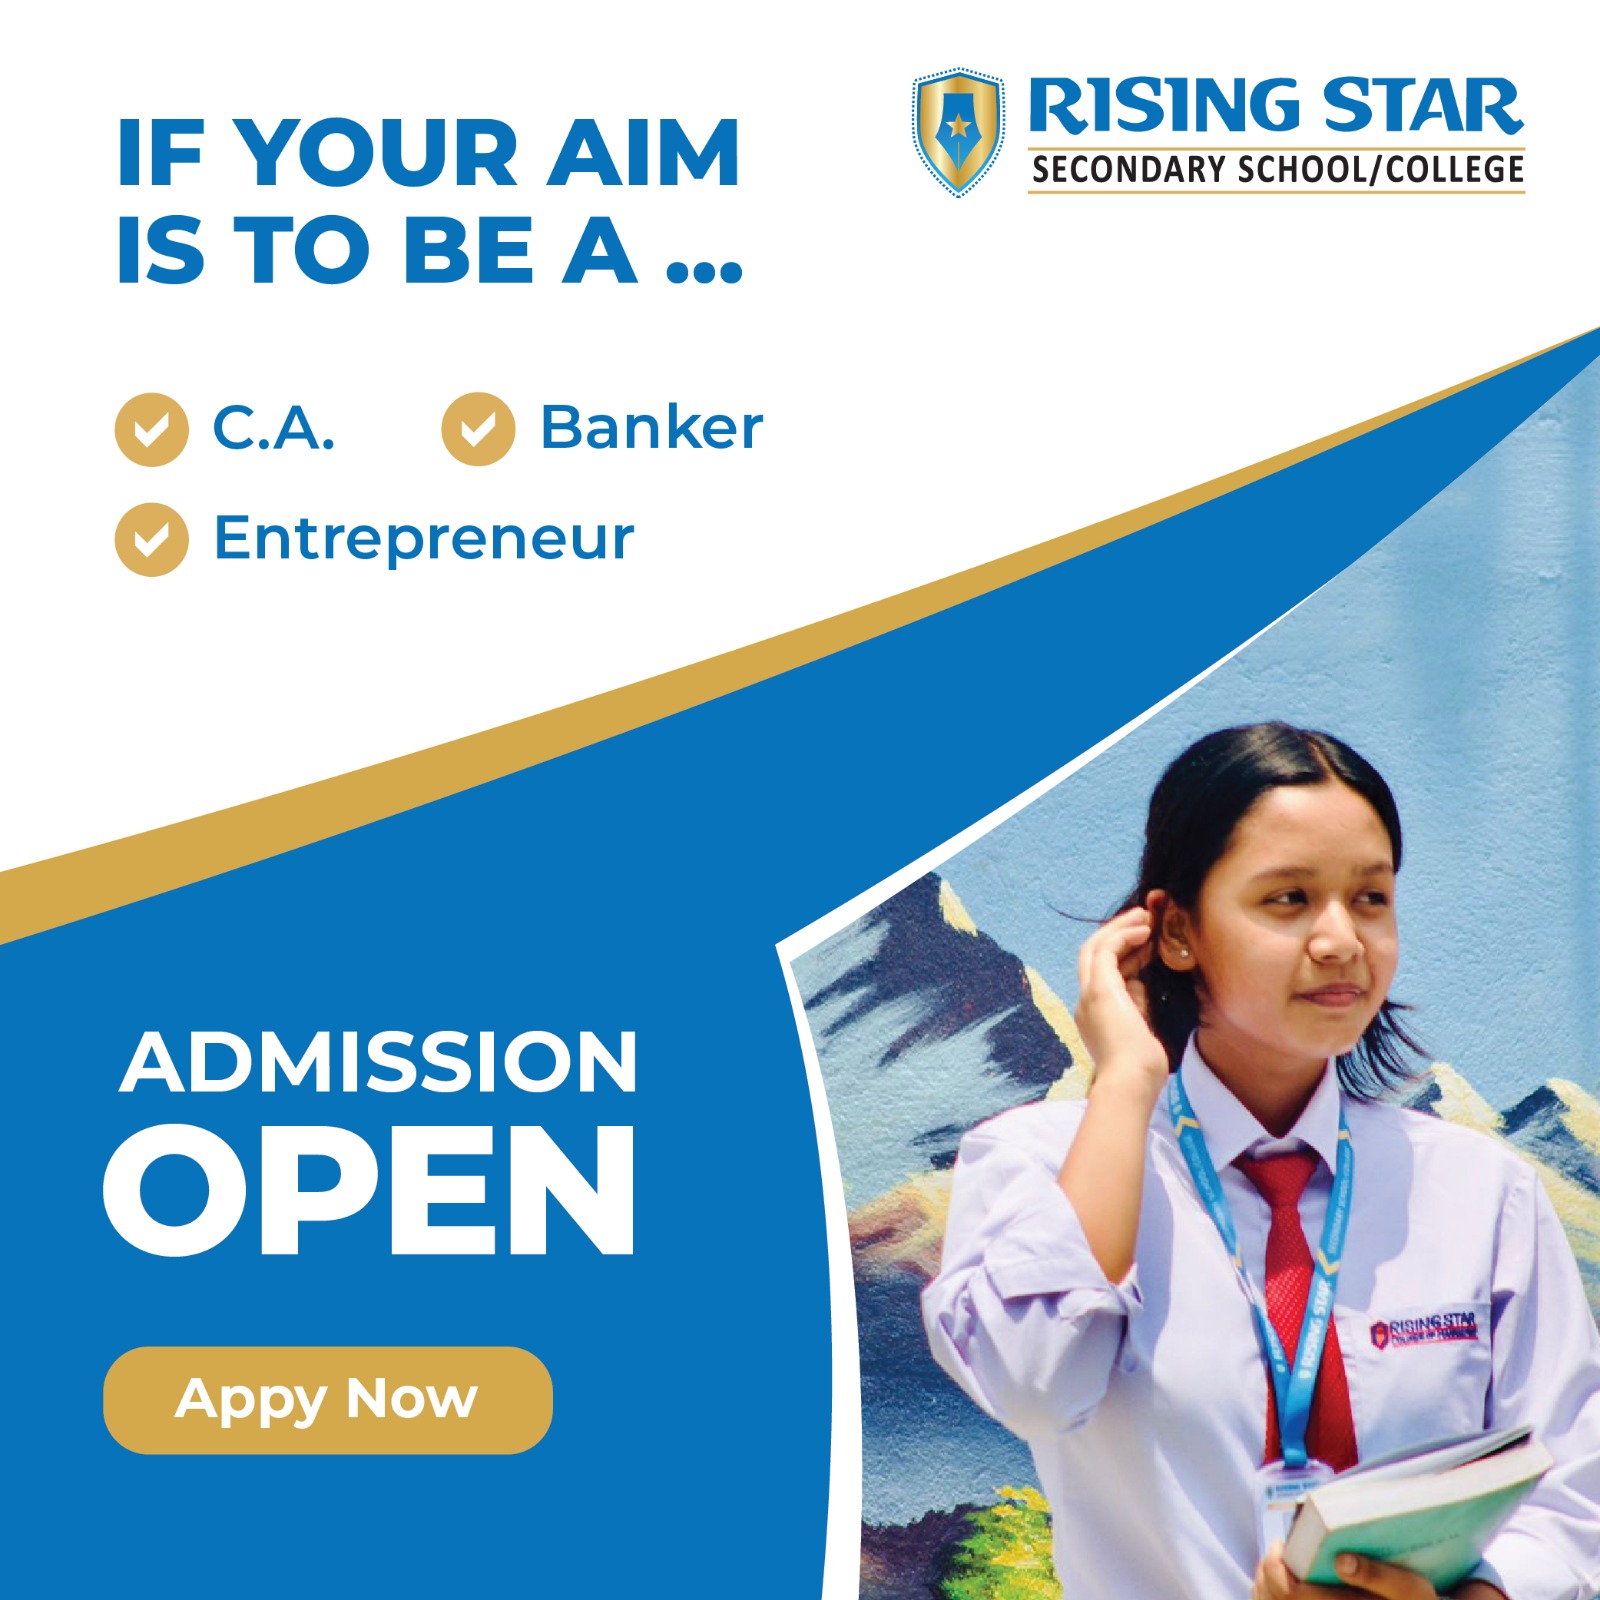 Risingstar School/College